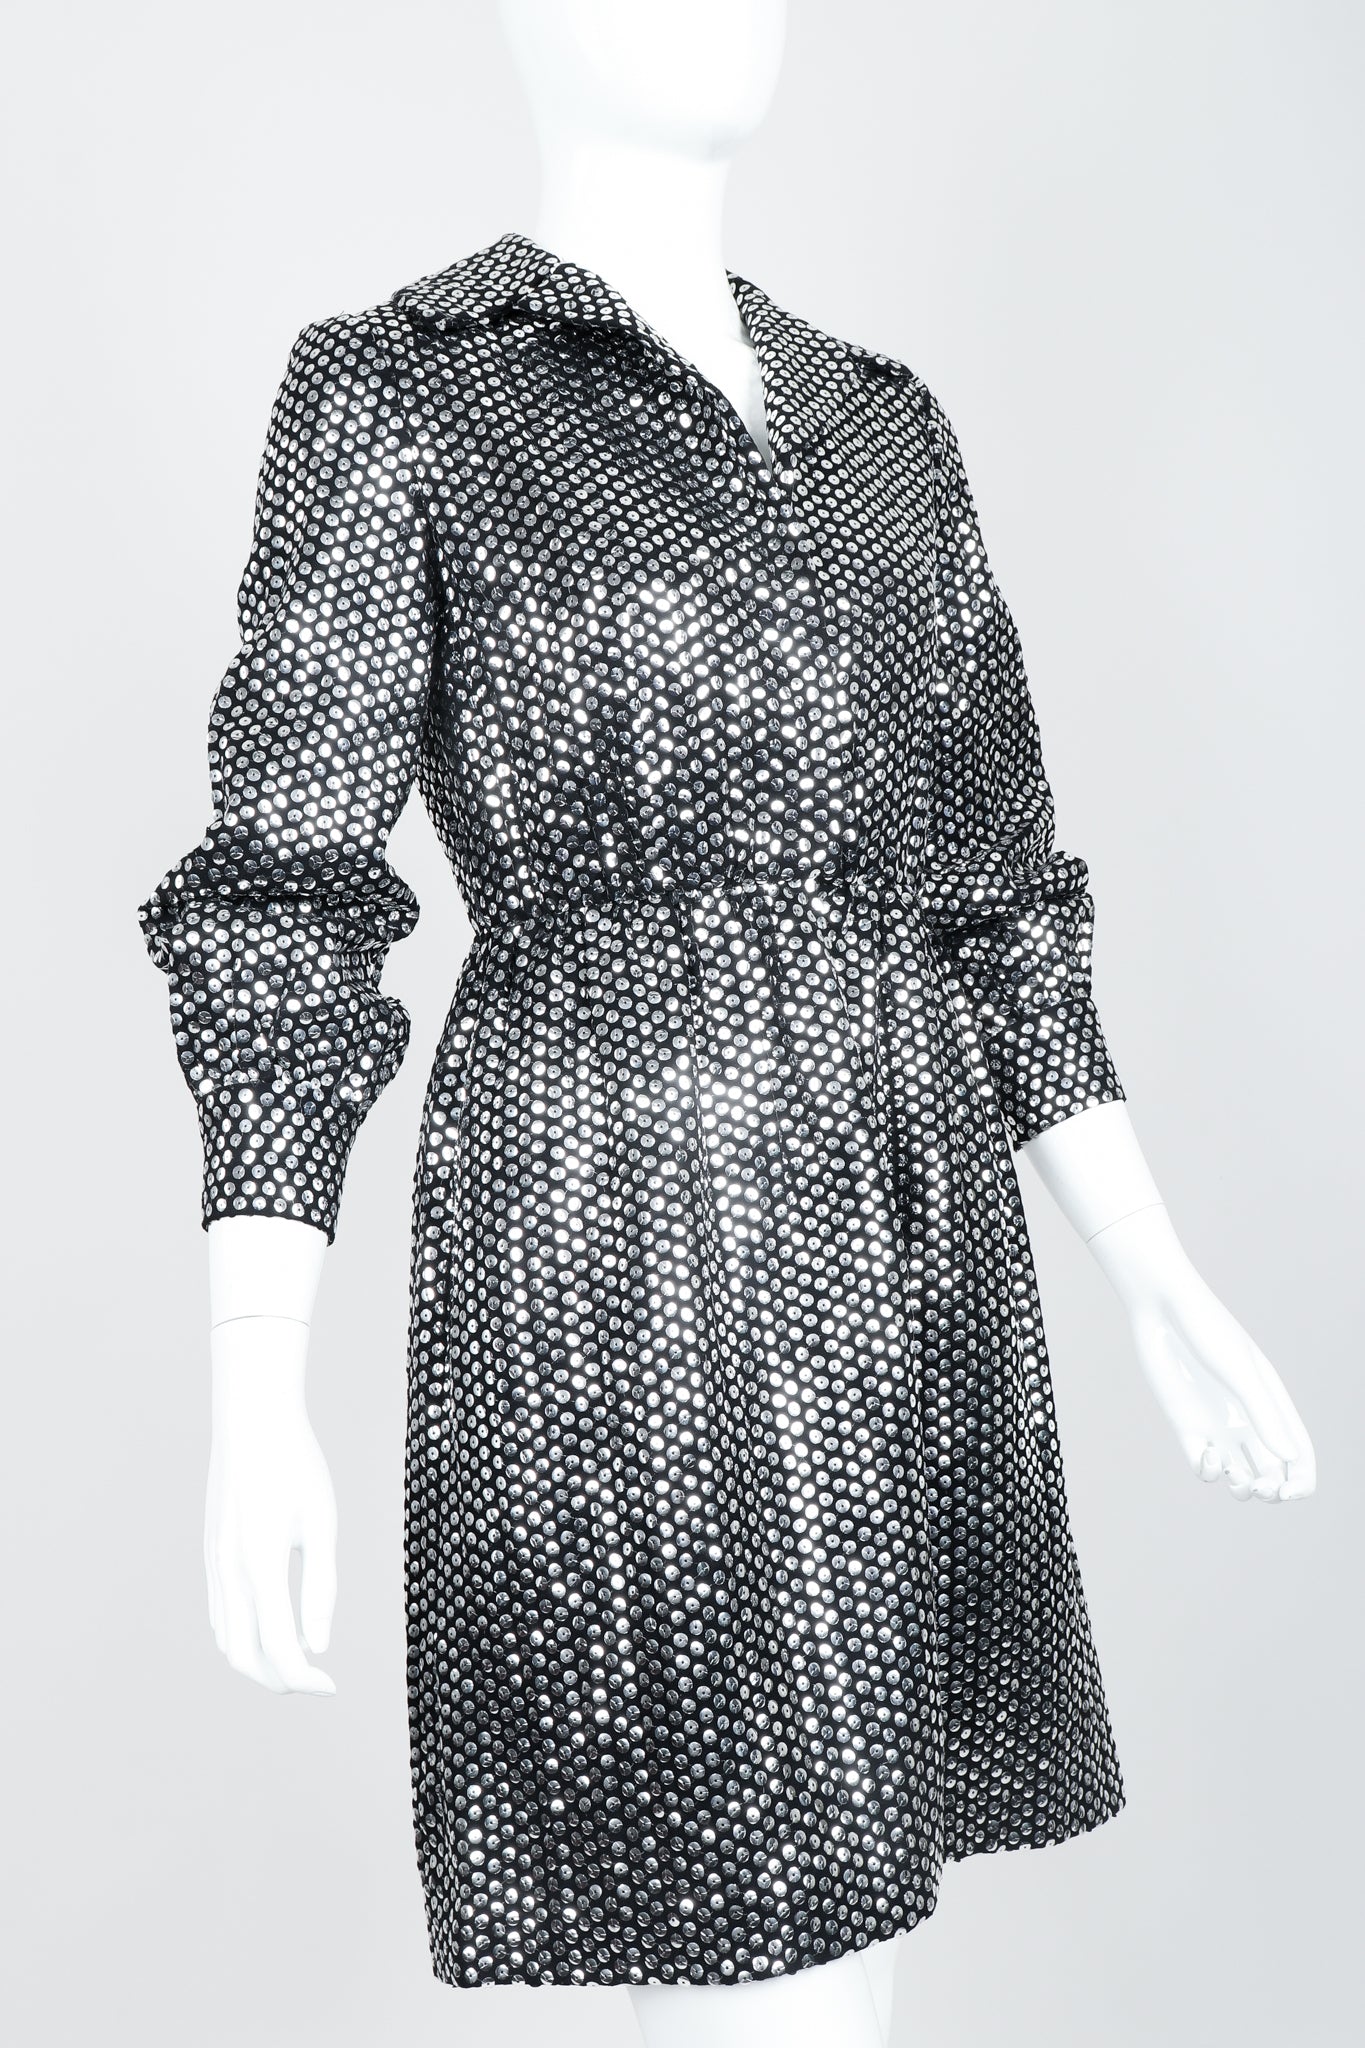 Vintage Joan Leslie by Kasper Sequin Mirror Shirtwaist Dress on Mannequin front crop at Recess 